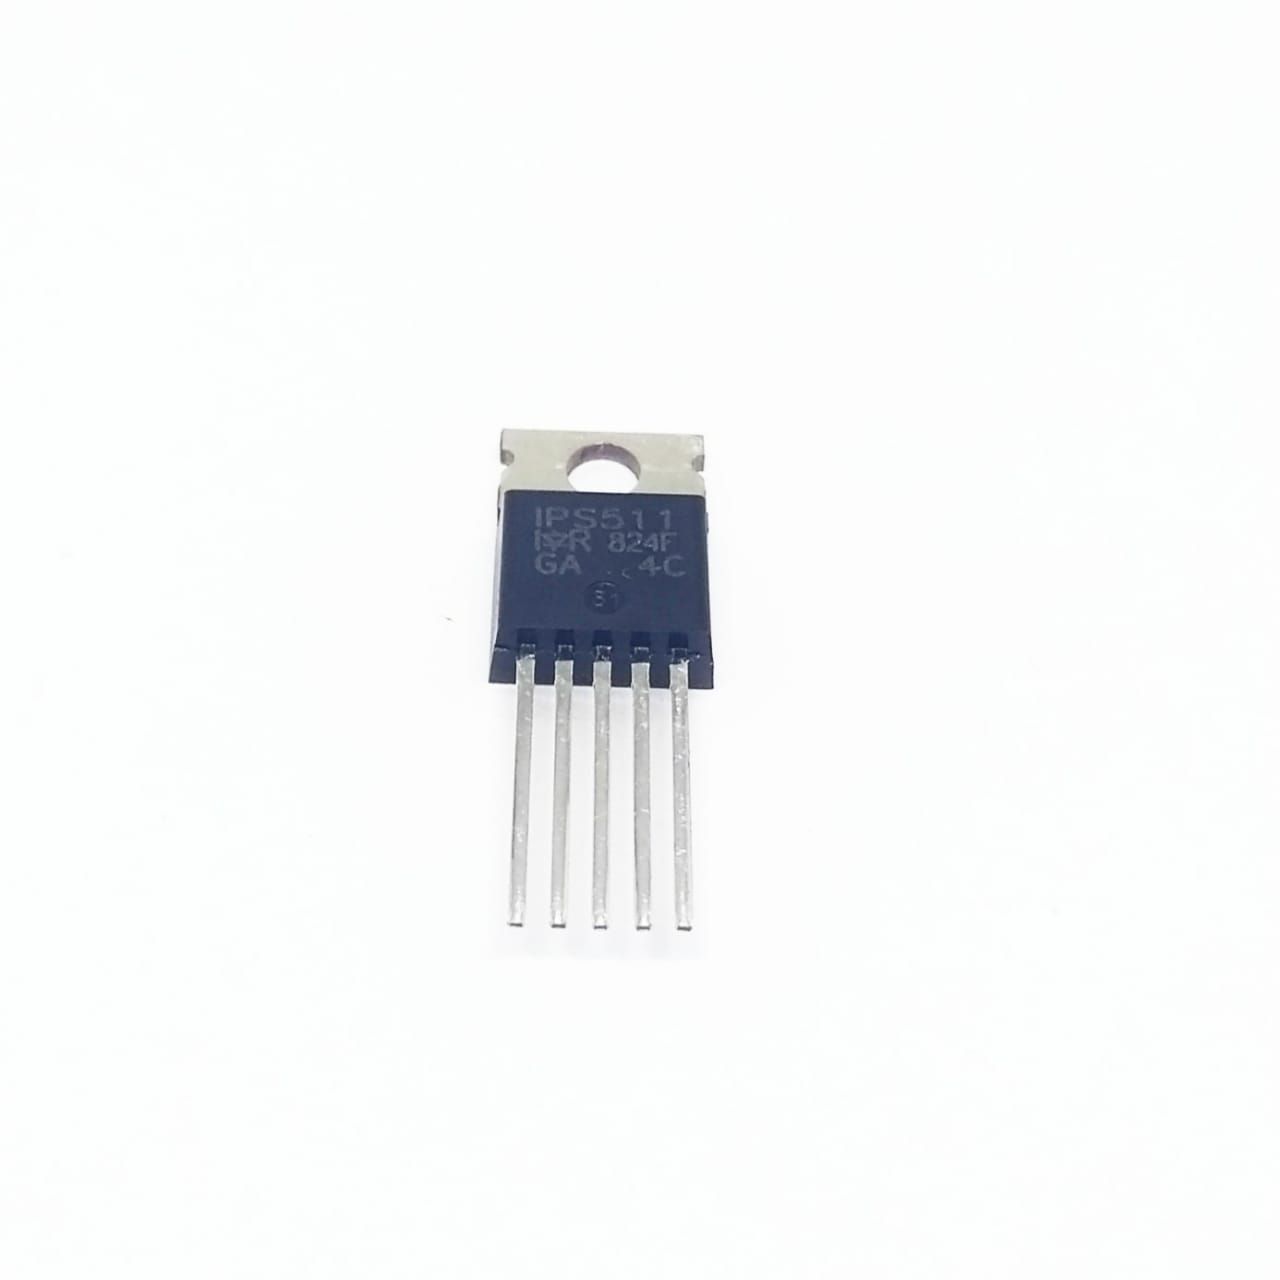 Kit 5 peças - Transistor IPS511 to-220 marca ir original